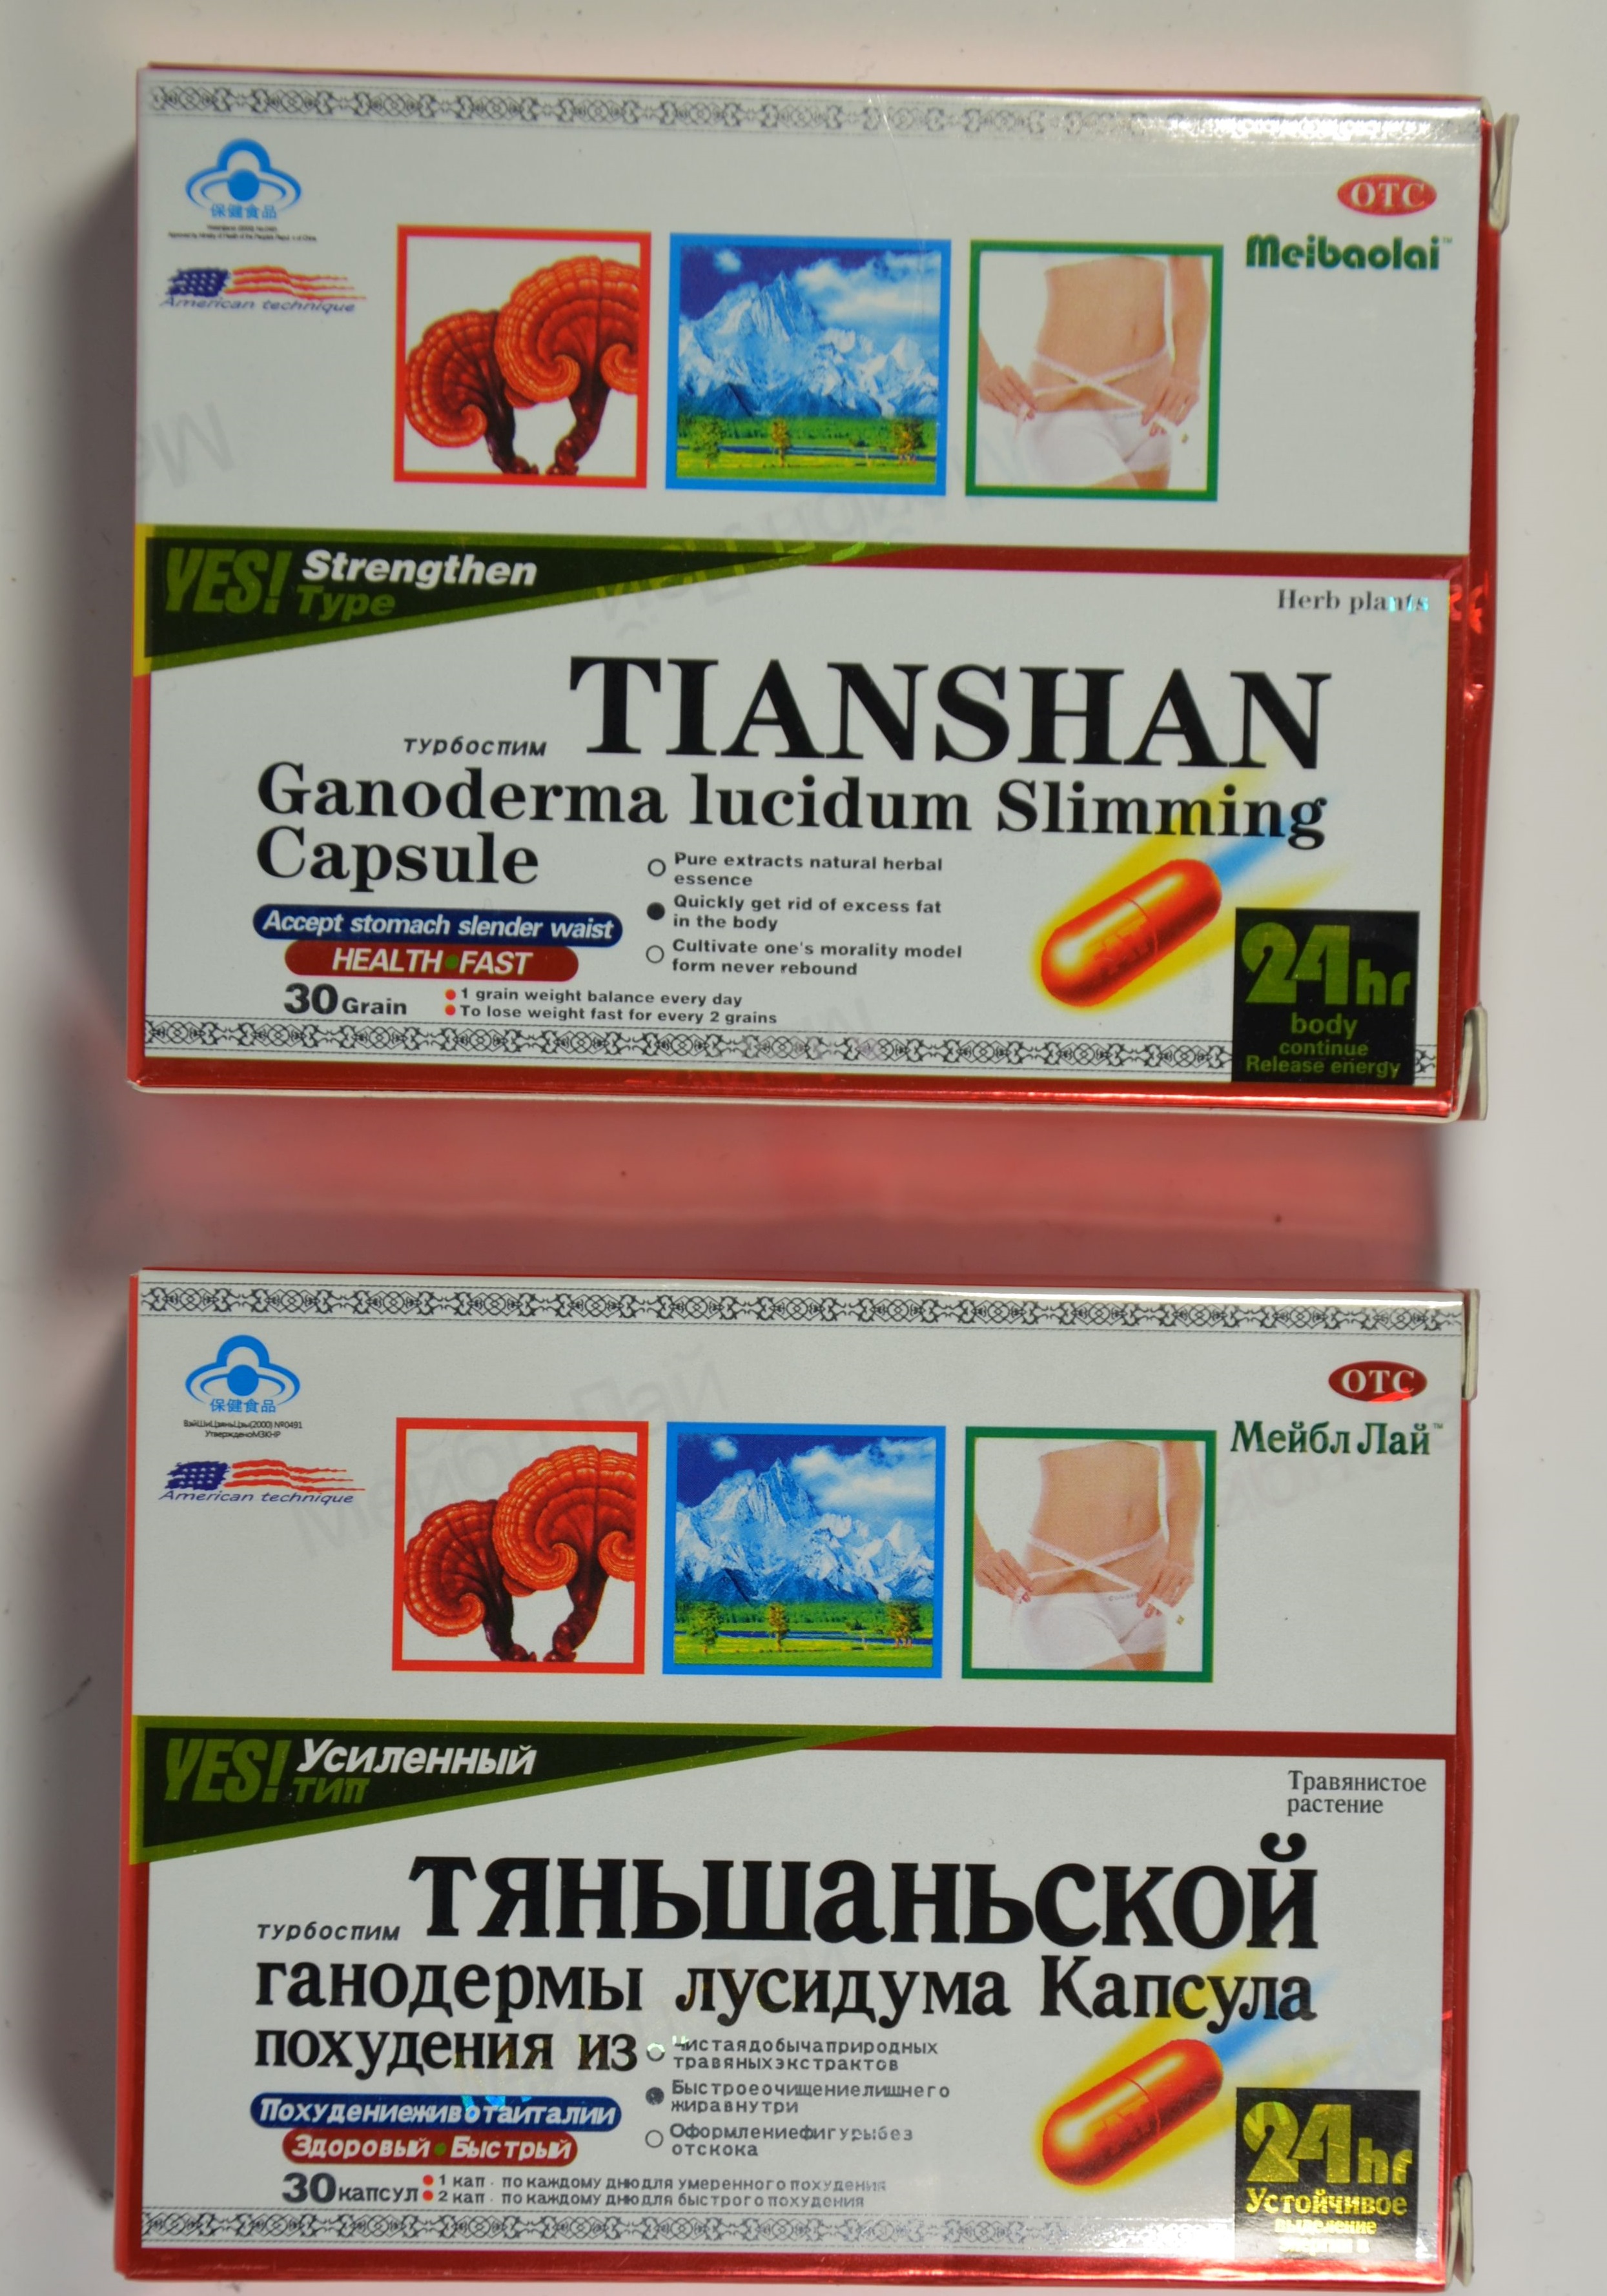 Image of the illigal product: Tianshan Ganoderma Lucidum Slimming Capsule